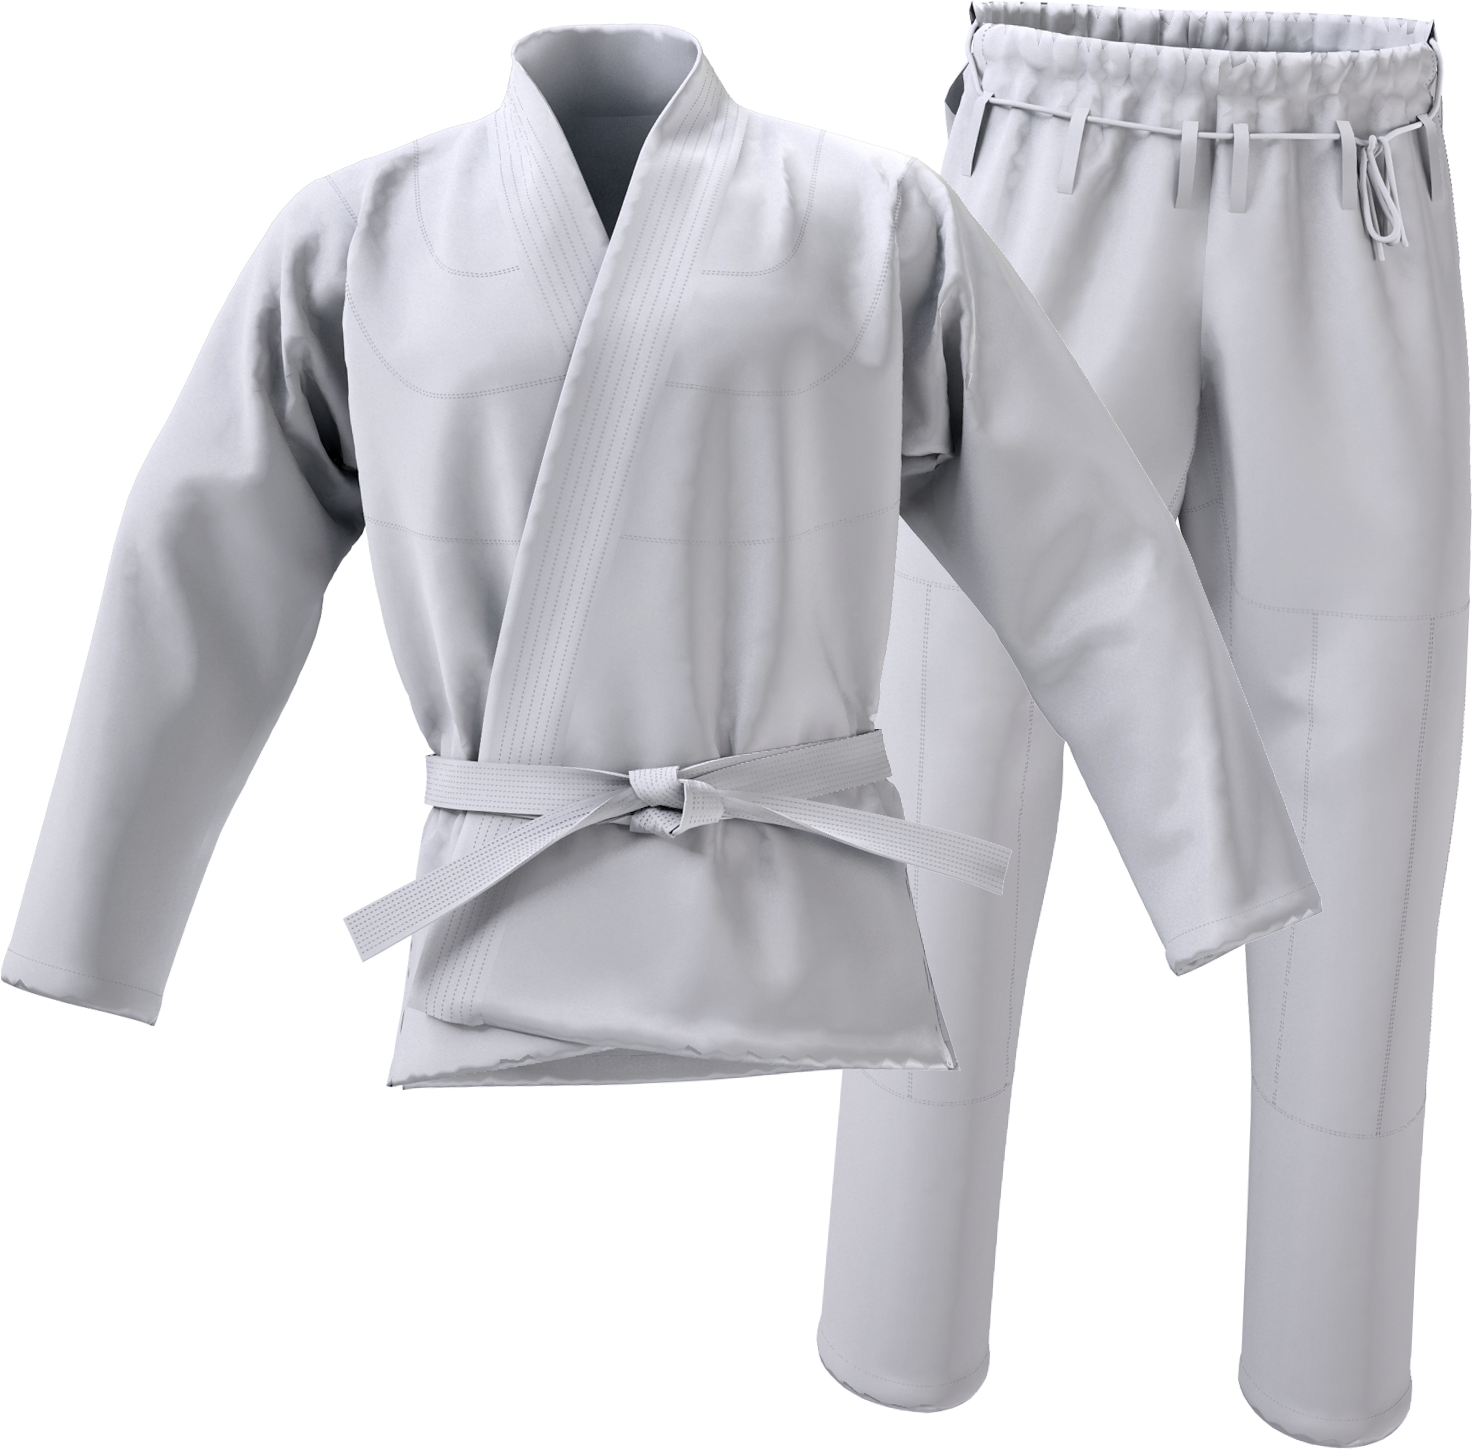 a white karate uniform with a white belt